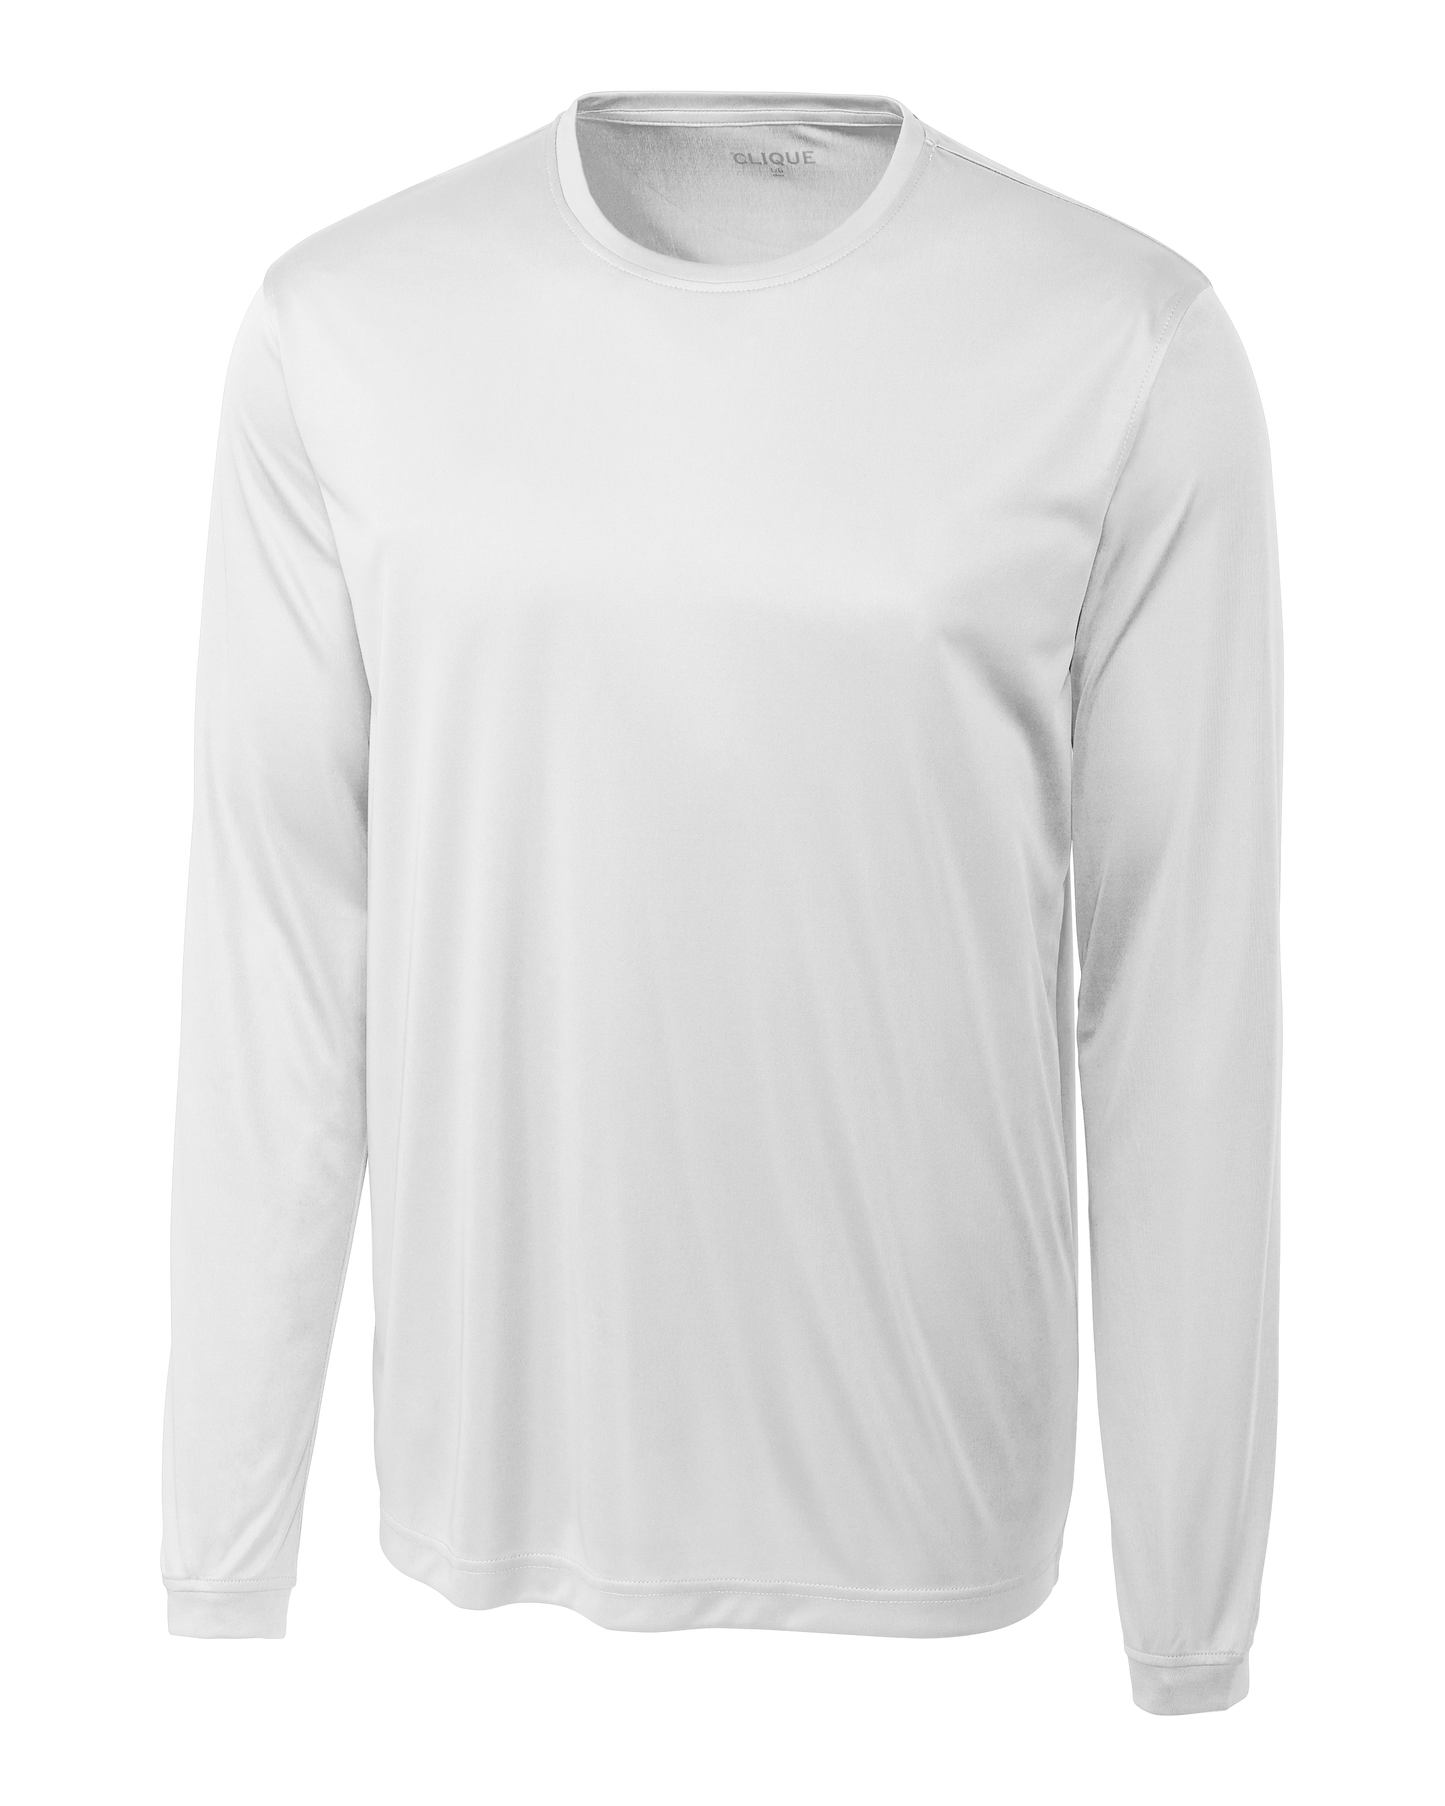 Performance Long Sleeve Mens Tee Shirt - MQK00078